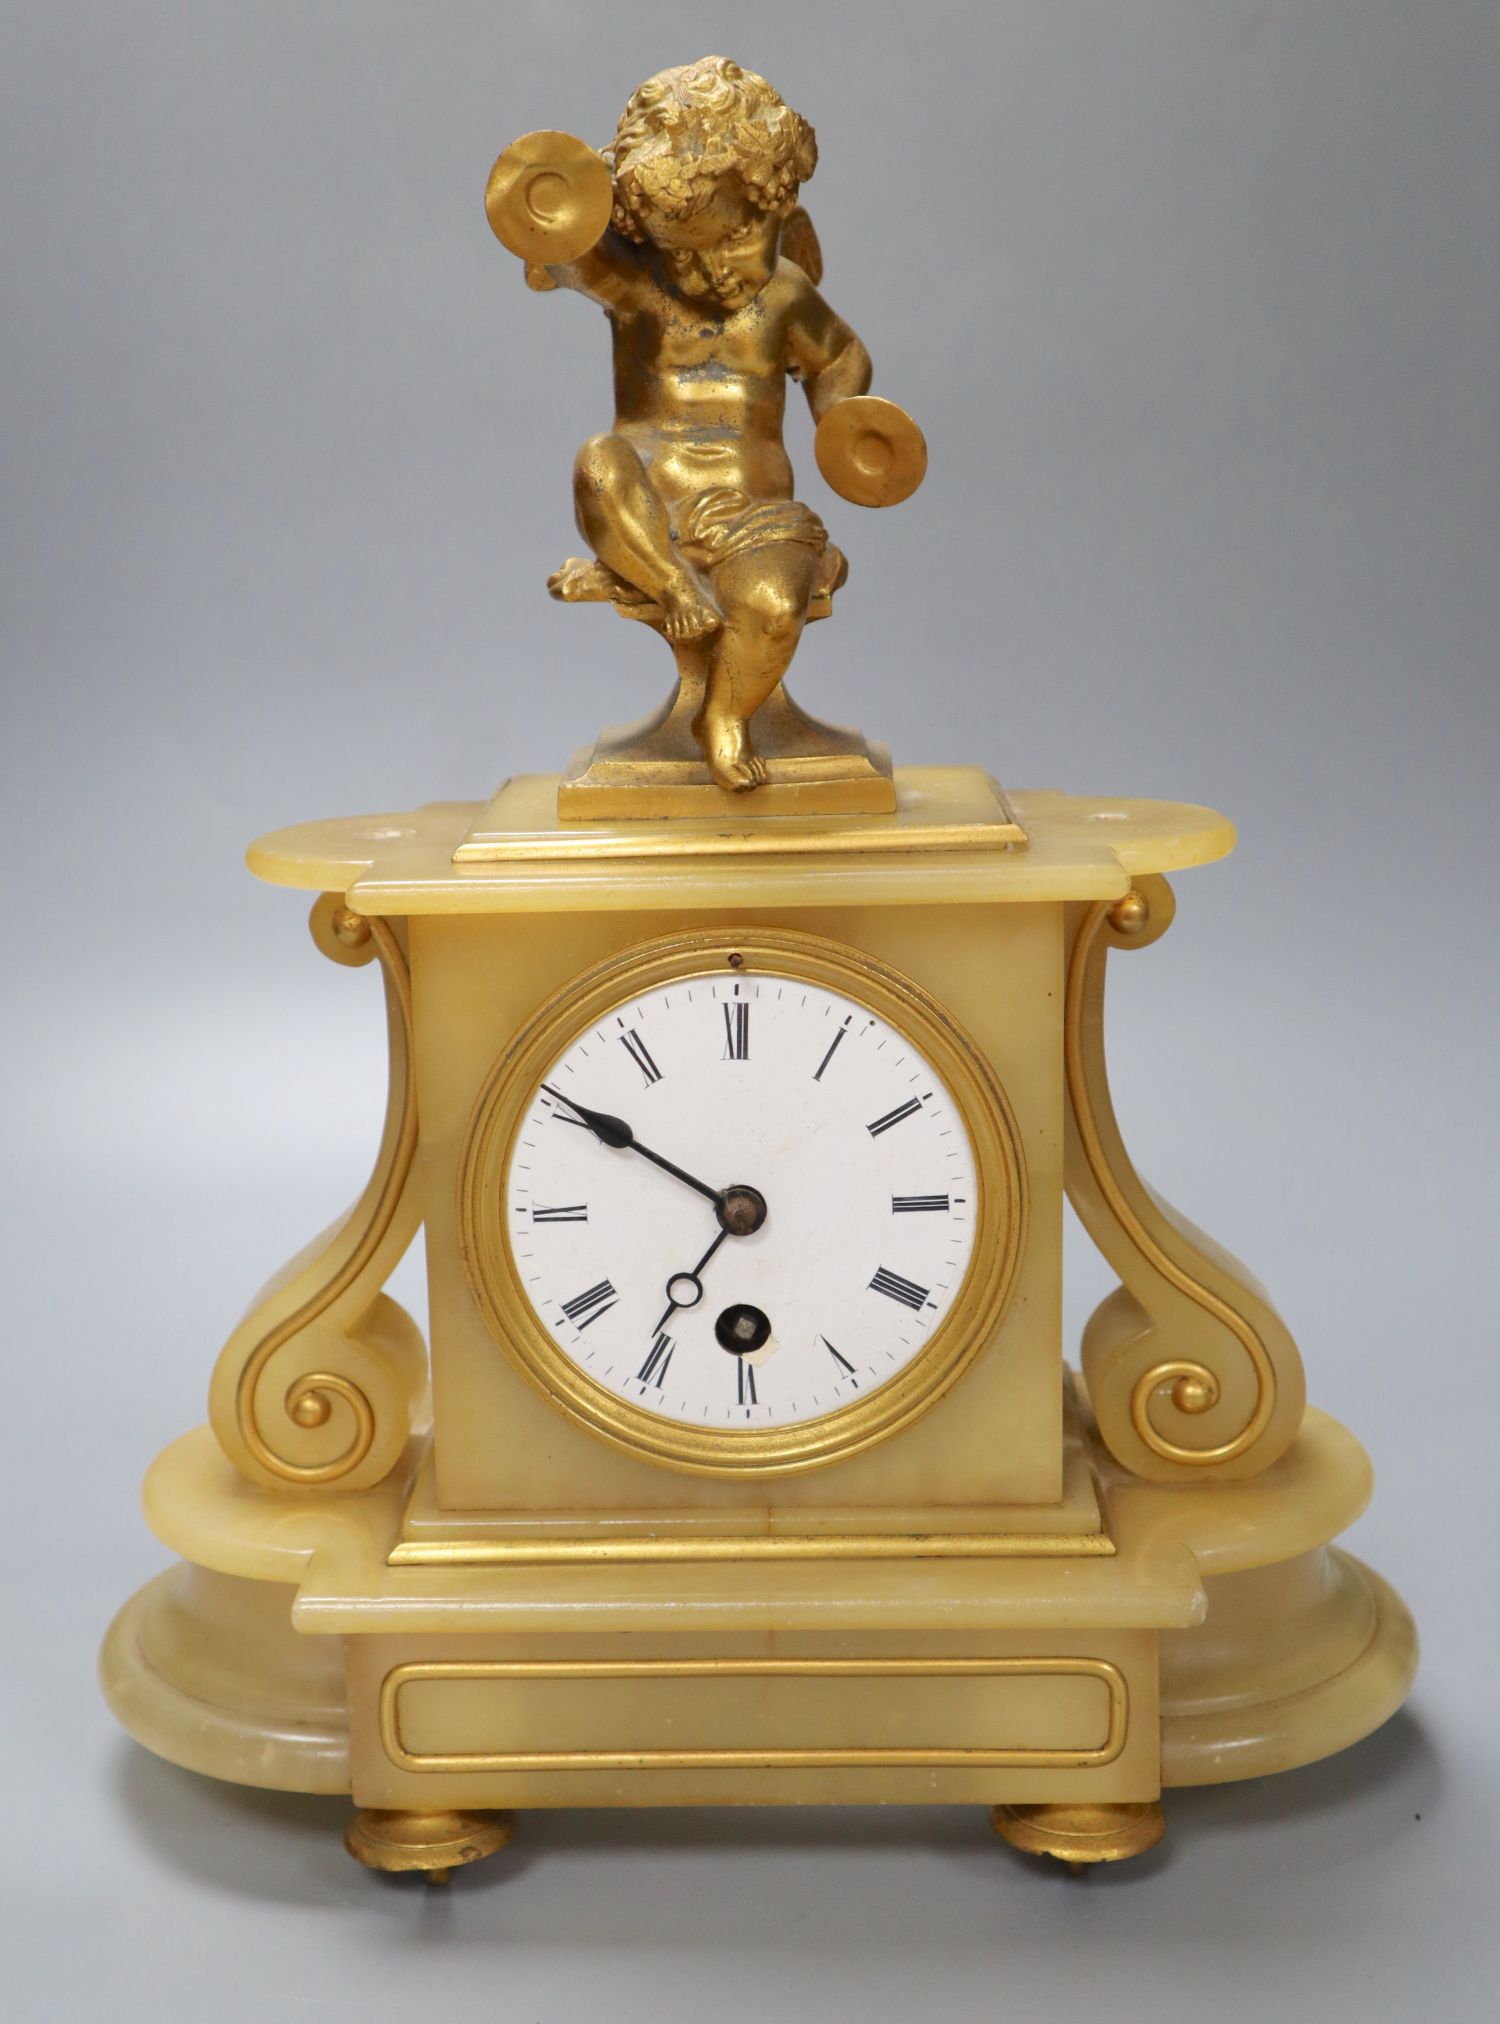 A late 19th century alabaster mantel clock, with gilt metal cherub surmount, French timepiece movement, 32cm